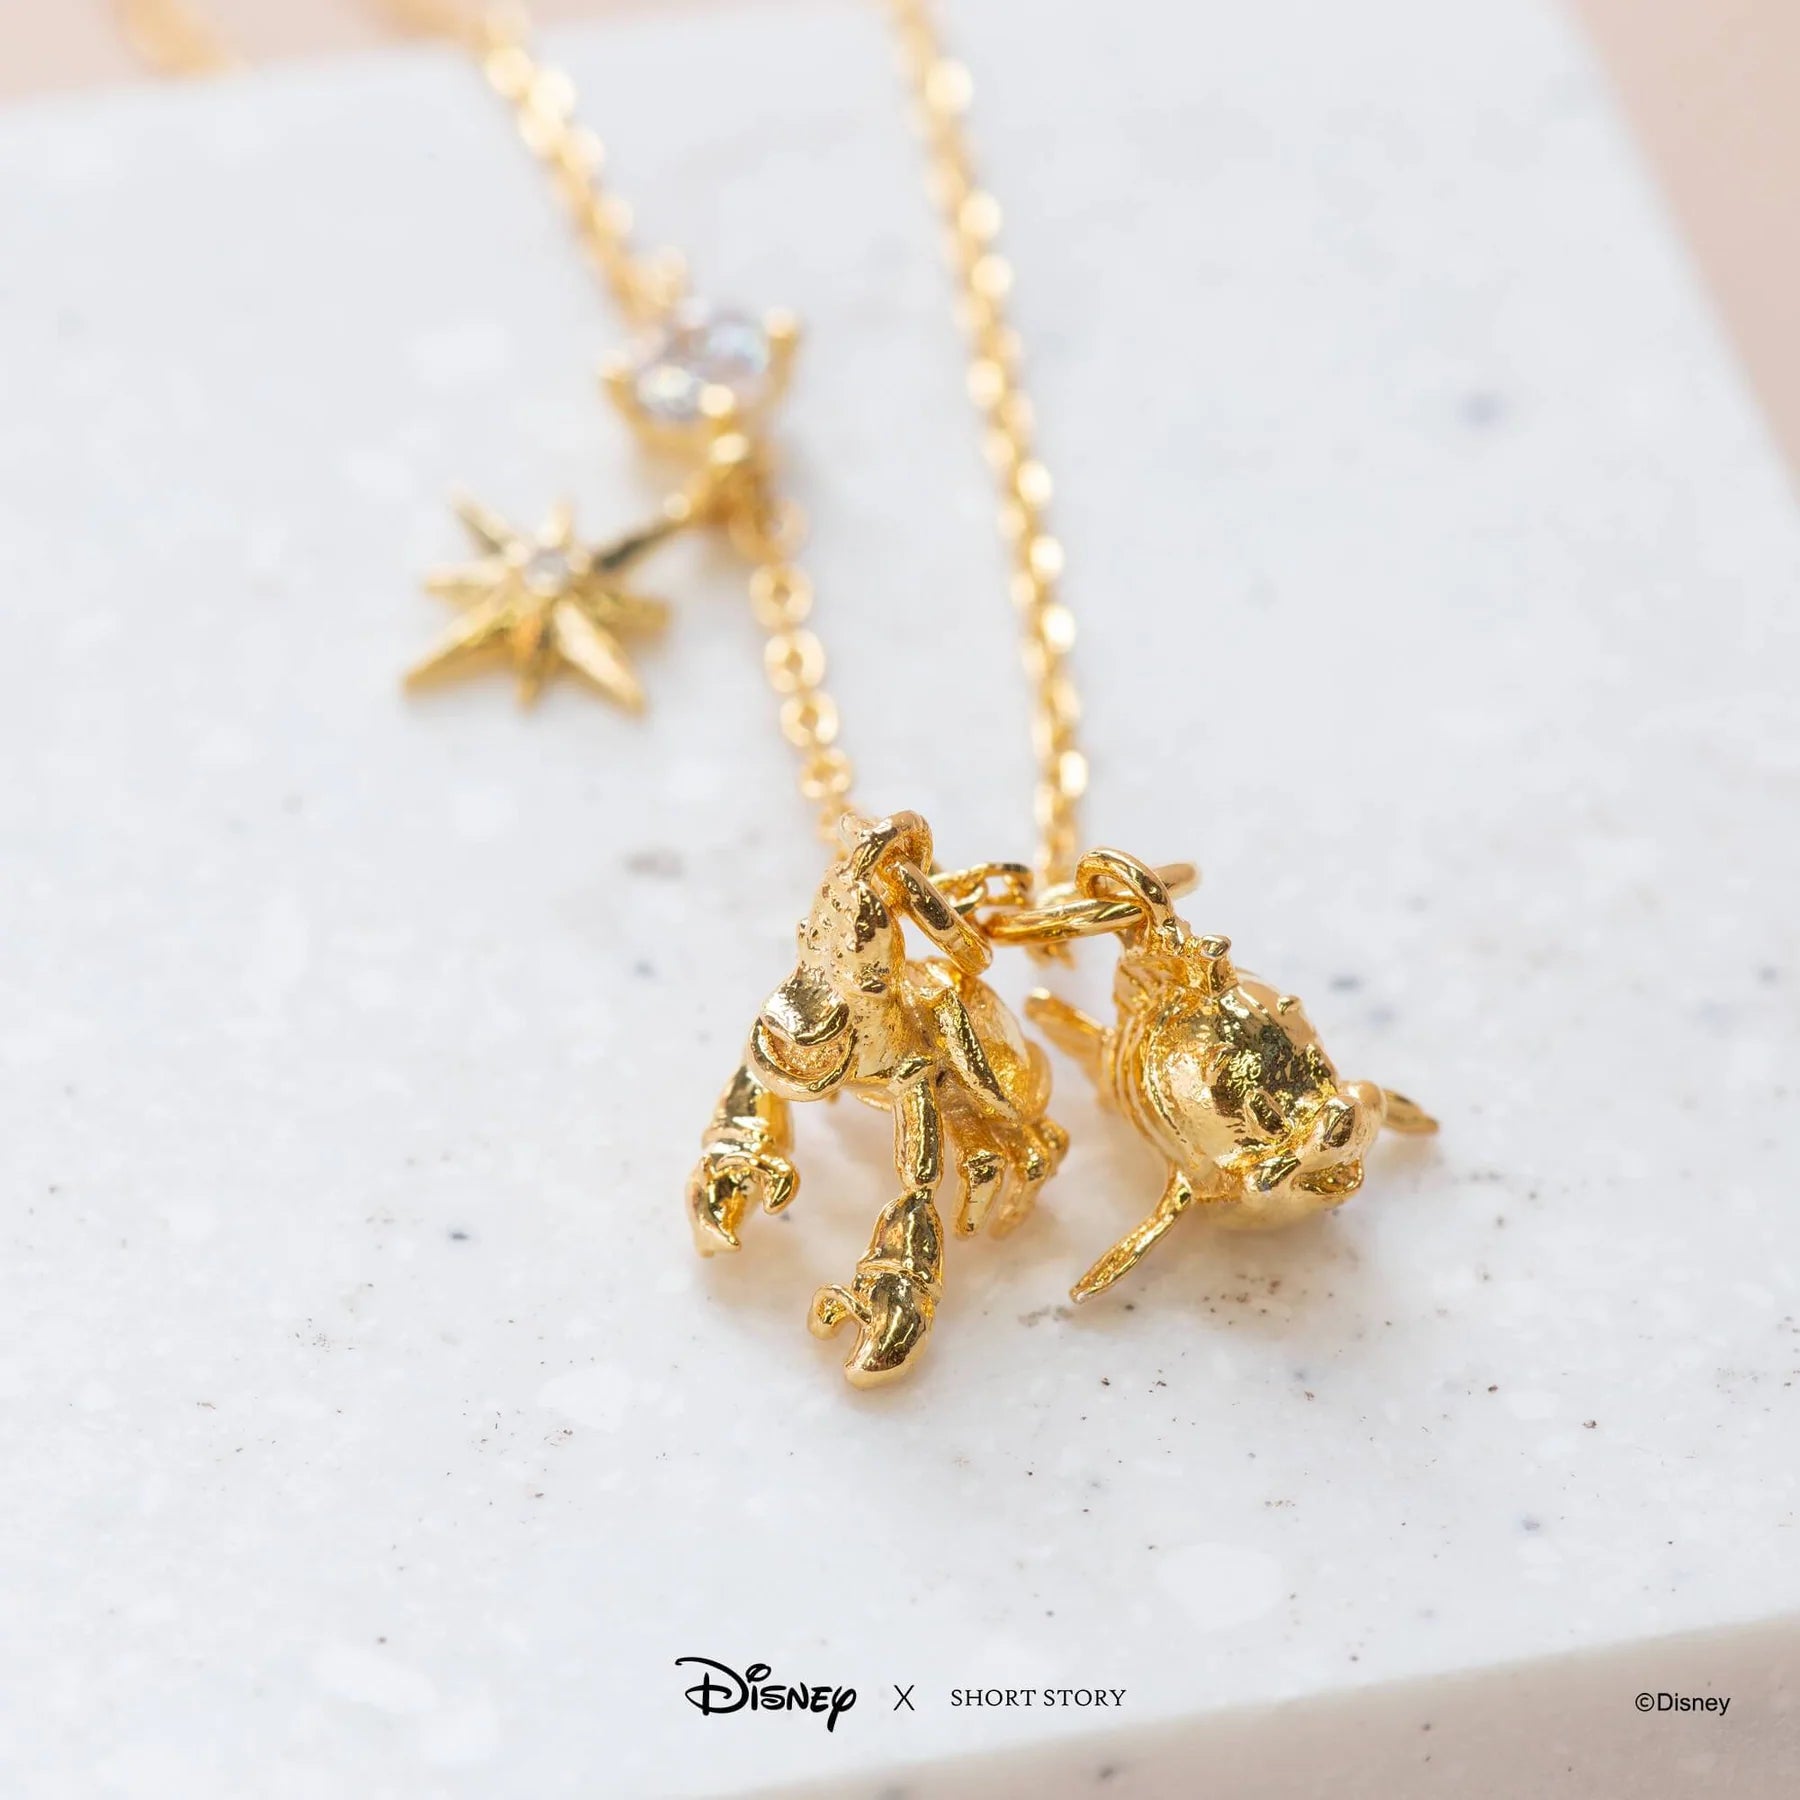 Short Story - Disney Necklace Flounder and Sebastian Gold